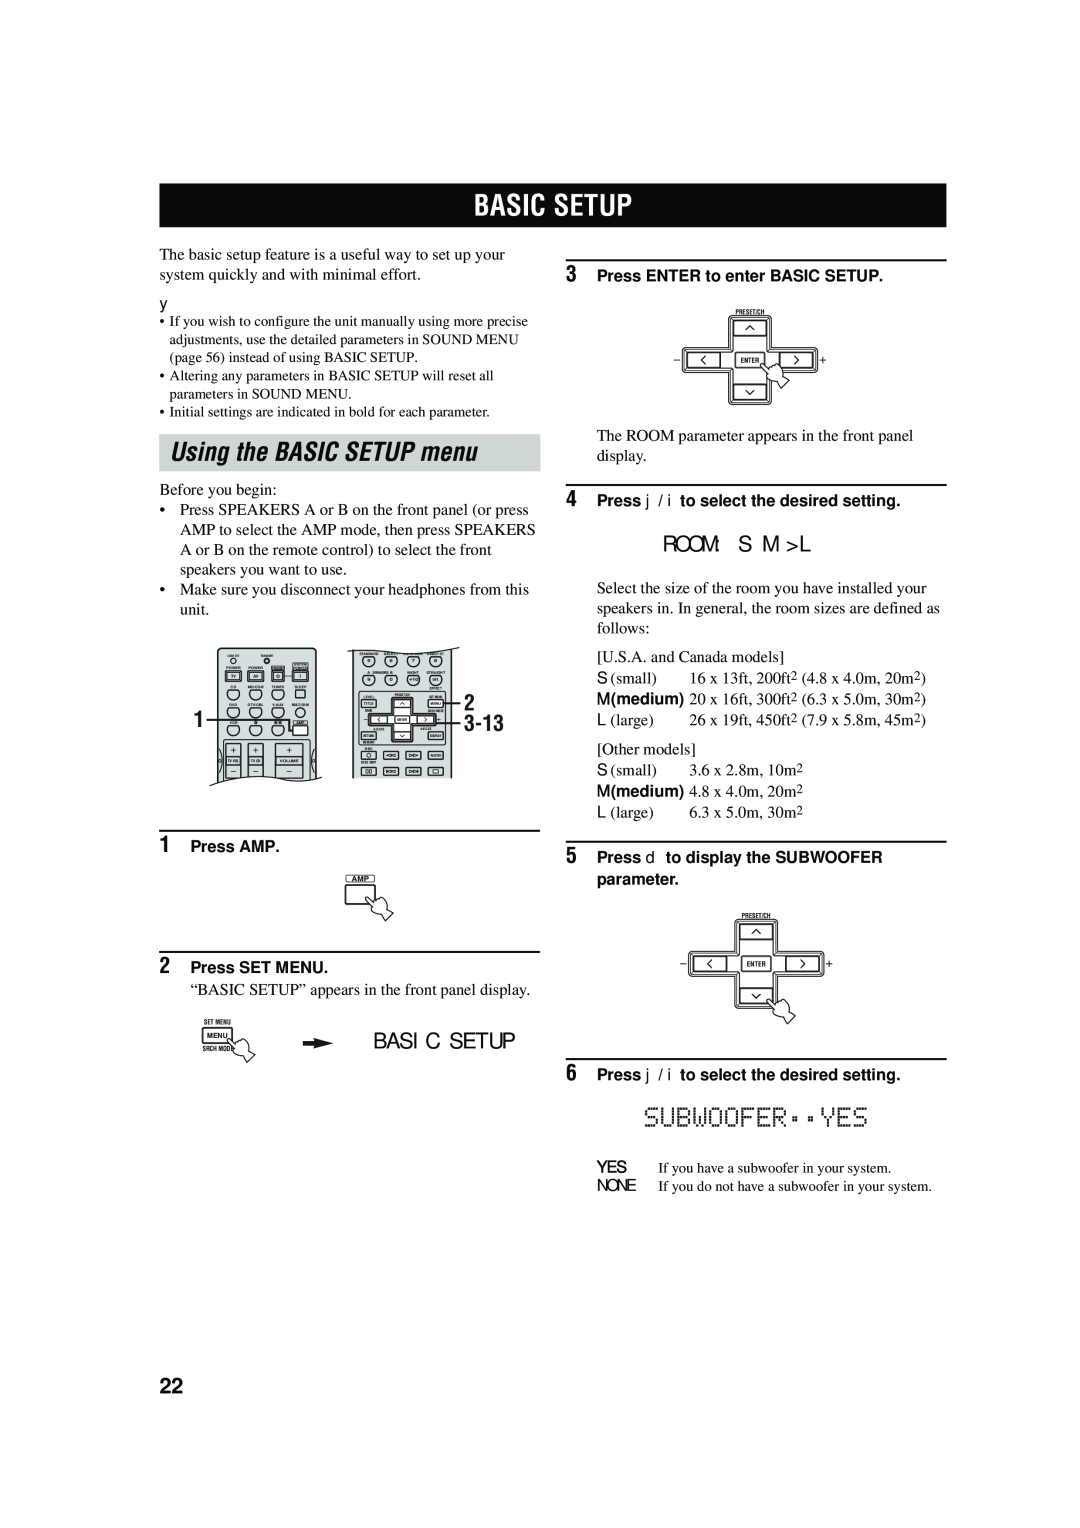 Yamaha RX-V457 owner manual Basic Setup, Using the BASIC SETUP menu, Subwoofer..Yes, Room S M L, 3-13 